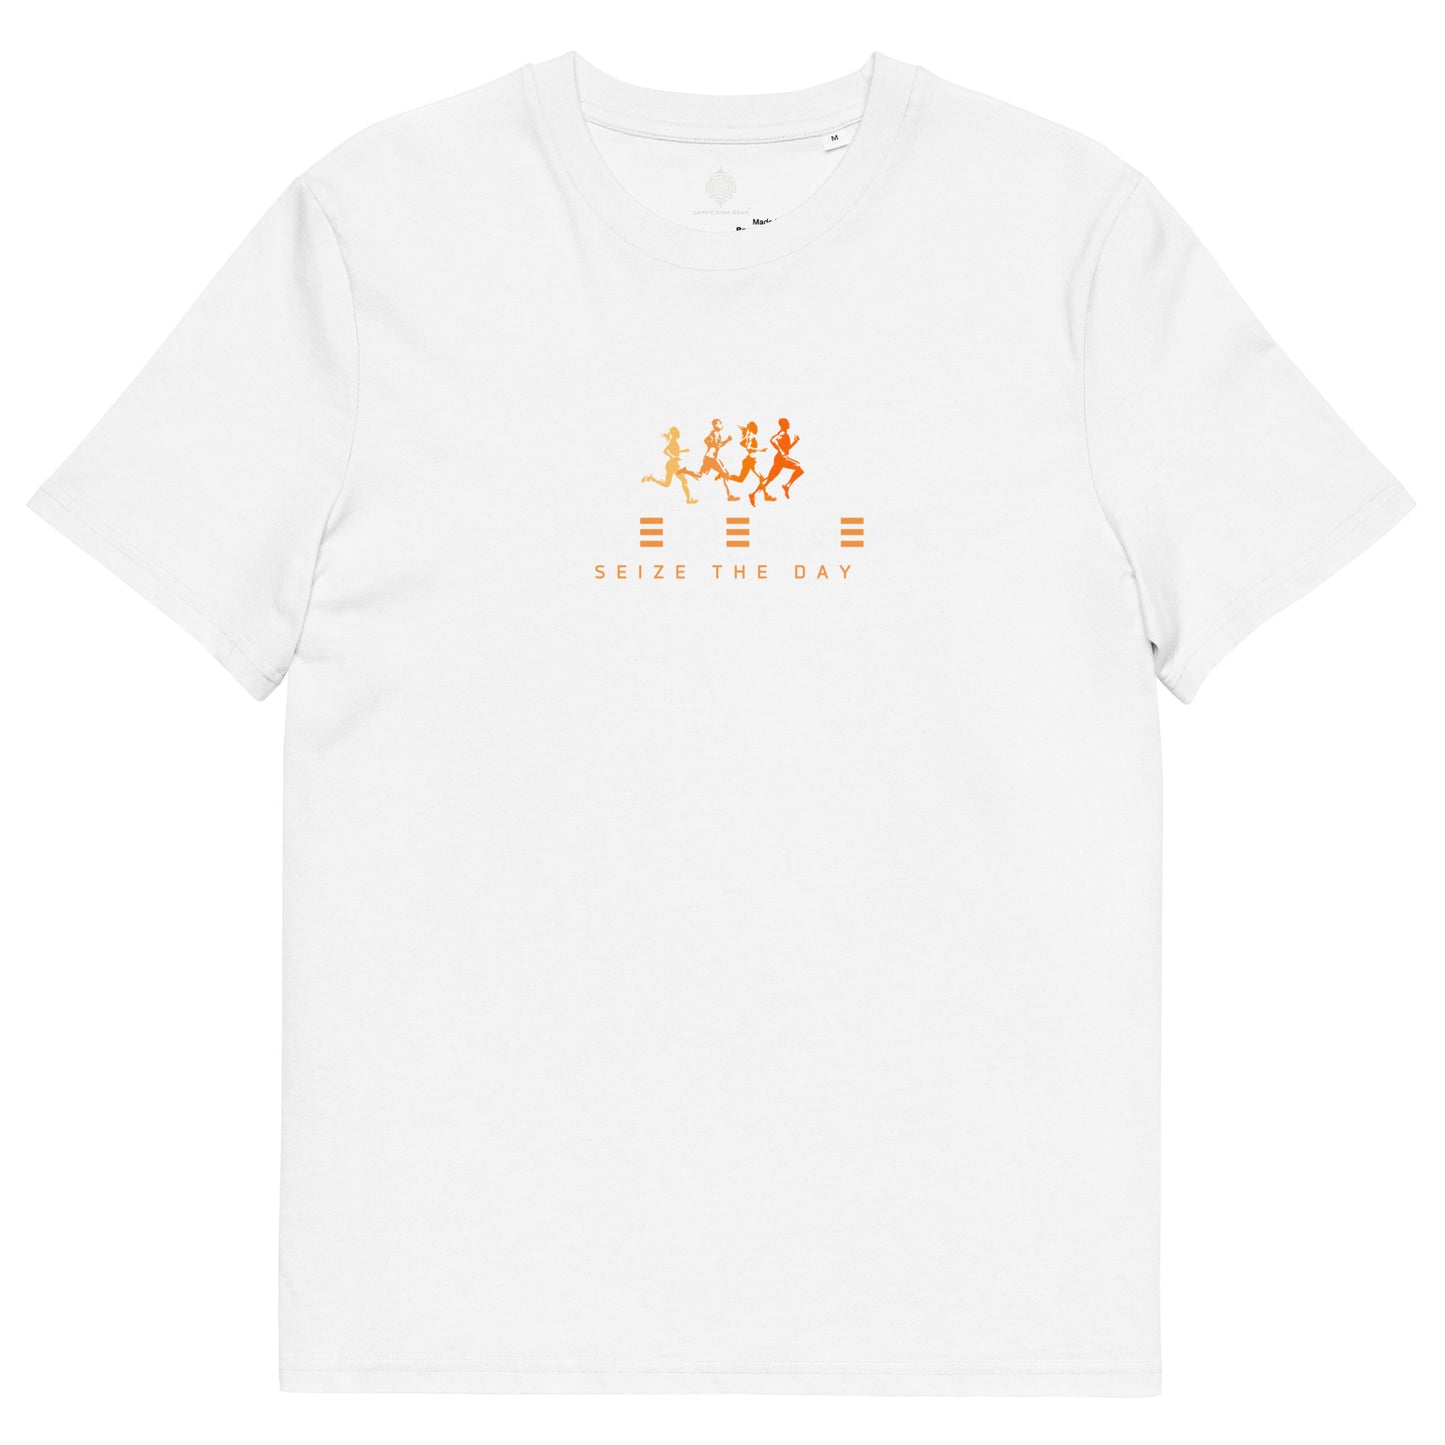 Carpe Diem Gear | Running | Orange Square Female Runner DELUXE | Unisex 100% Organic Cotton T-Shirt